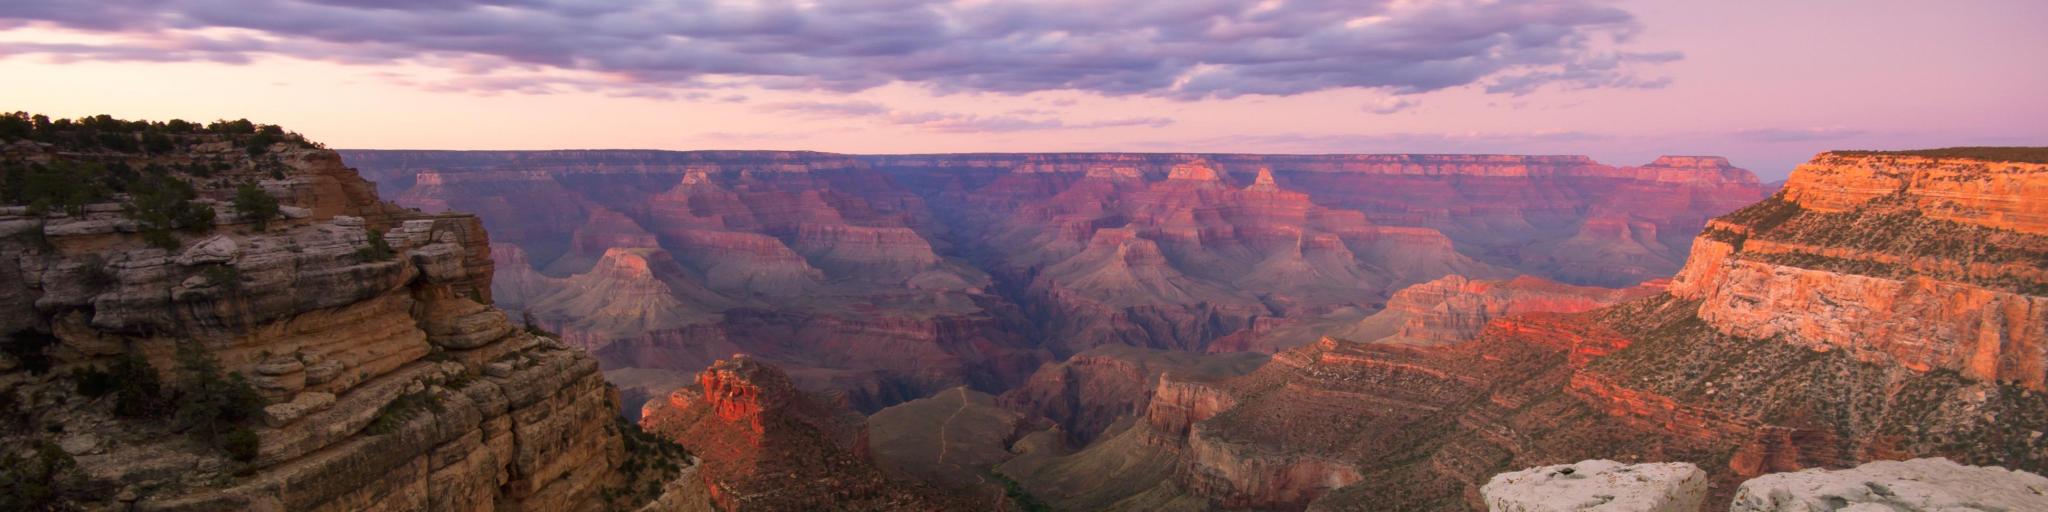 Sunset view of the Grand Canyon National Park, Arizona, USA.